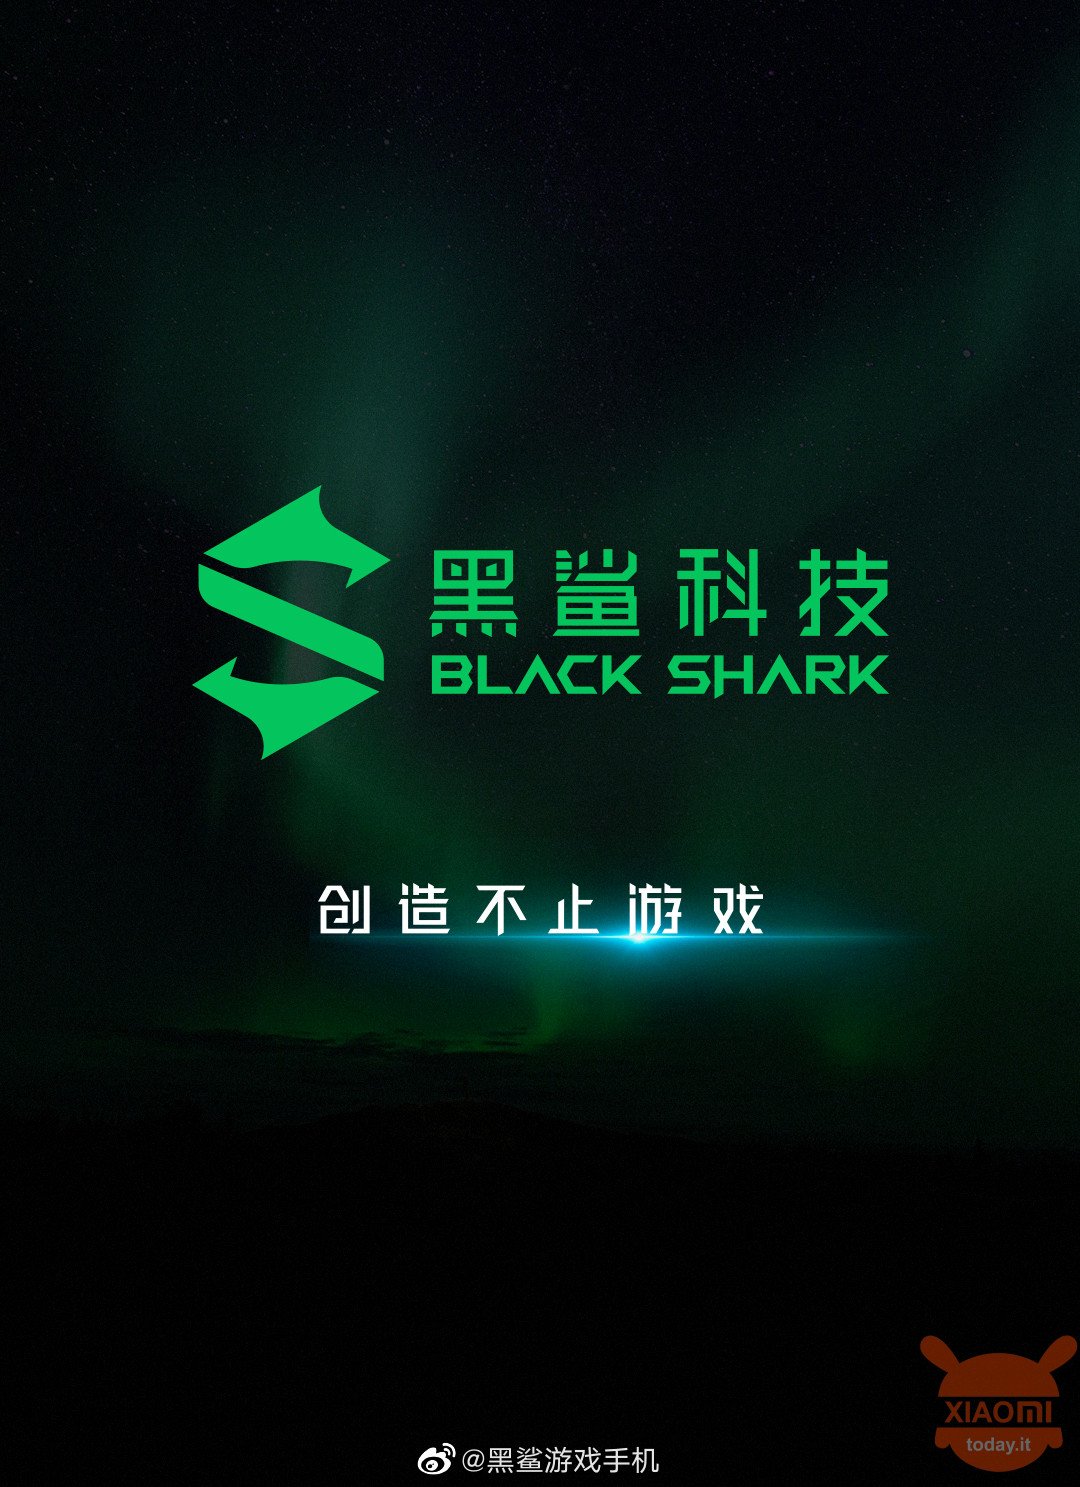 Xiaomi Black Shark logo